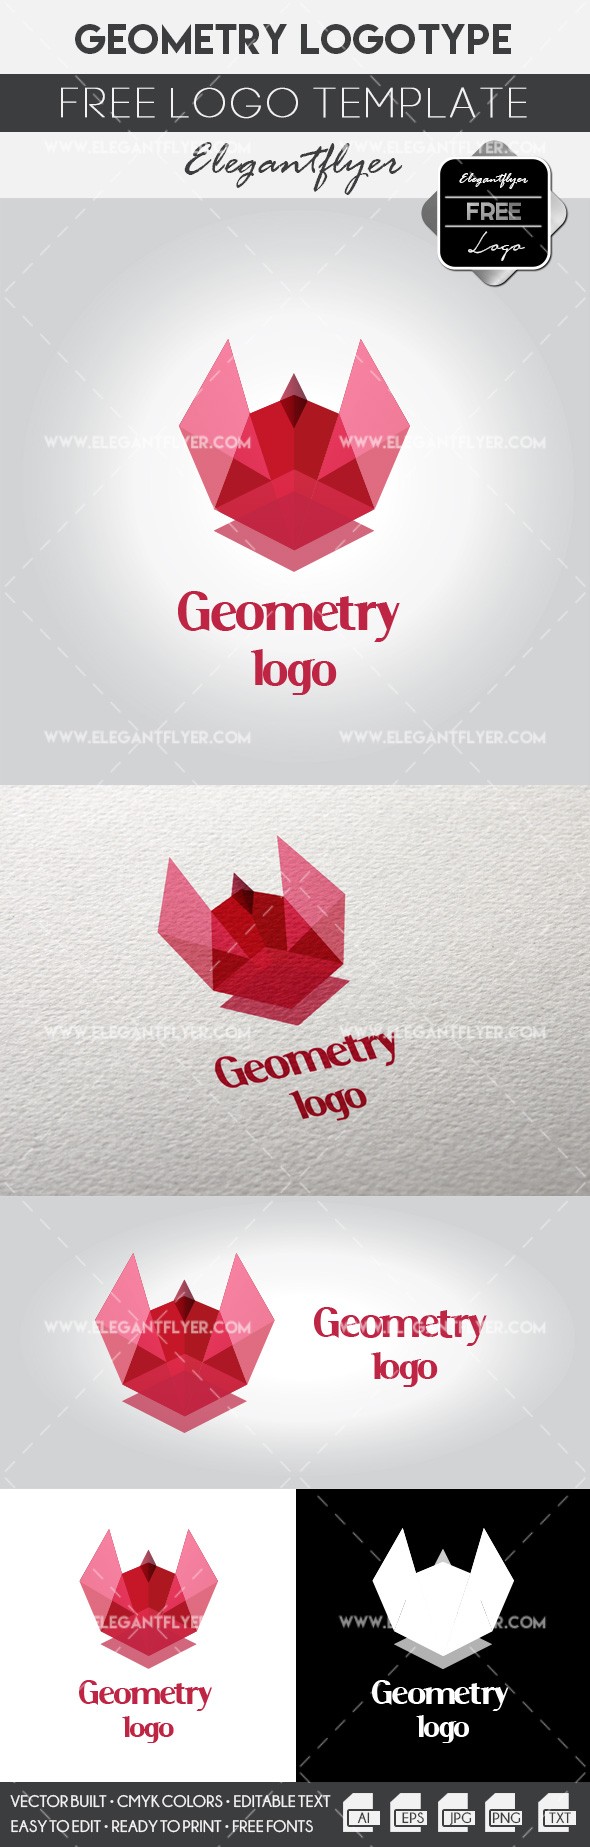 Geometry logo by ElegantFlyer